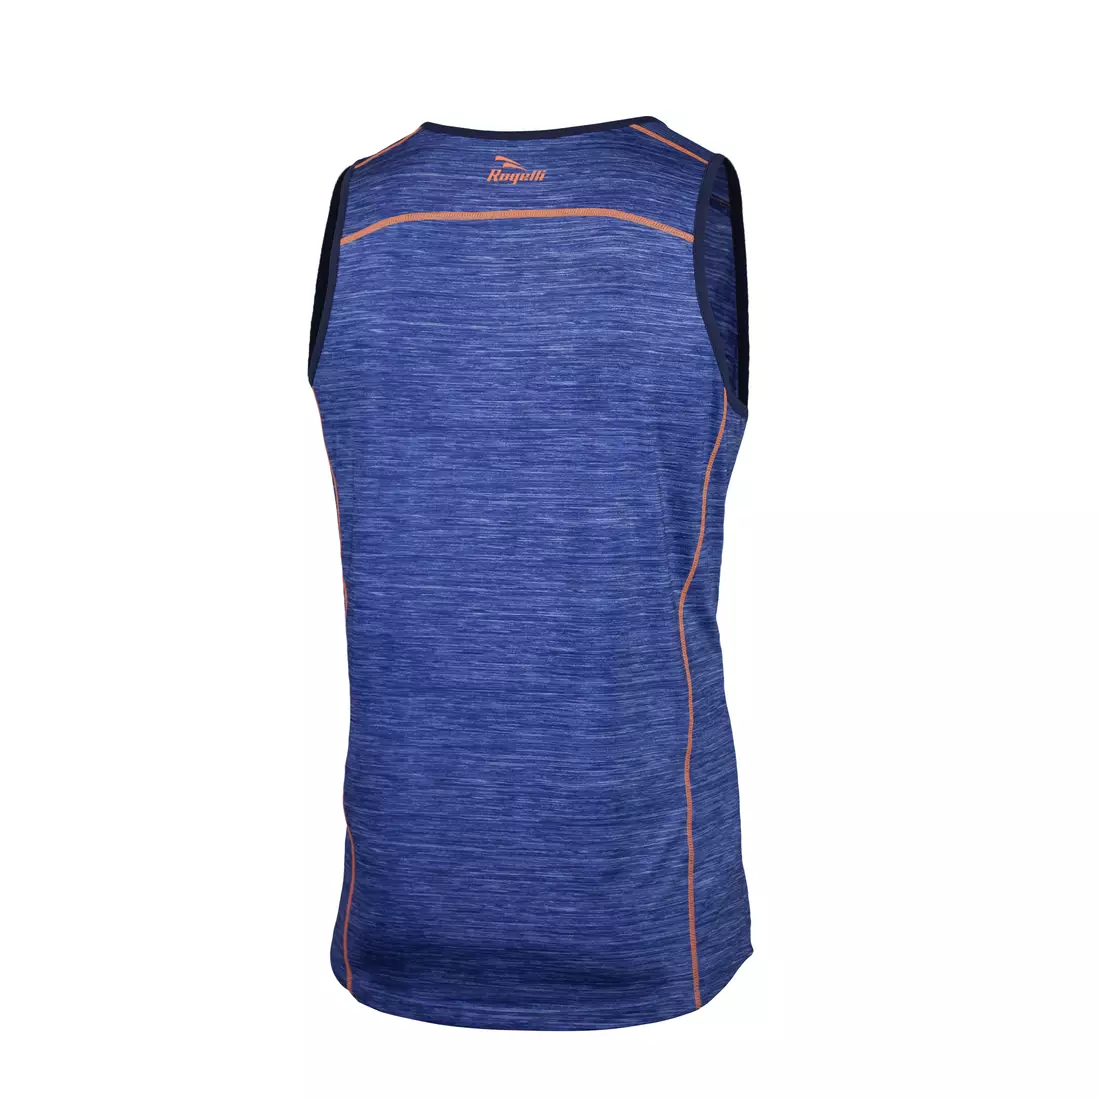 ROGELLI RUN STRUCTURE 830.241 - men's t-shirt, running vest, blue and orange